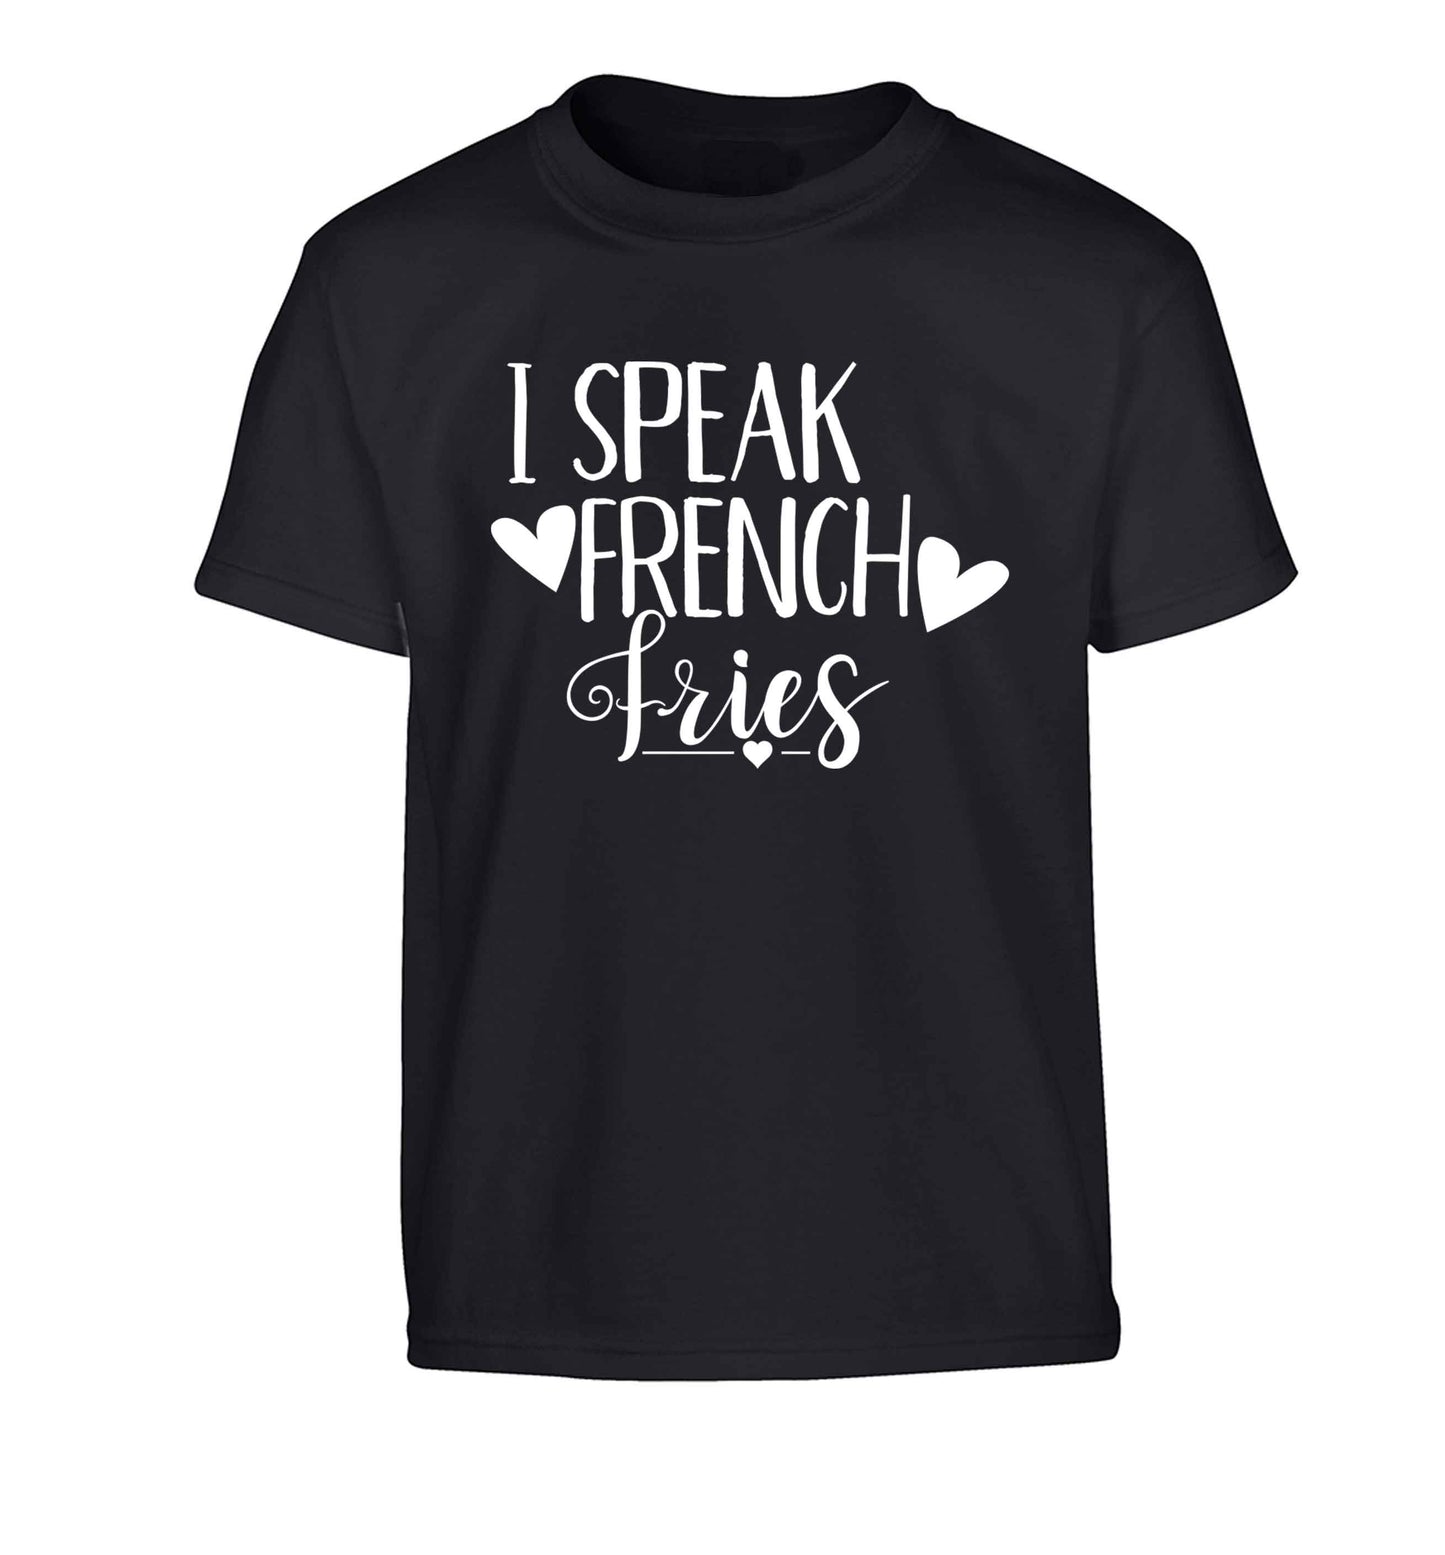 I speak French fries Children's black Tshirt 12-13 Years